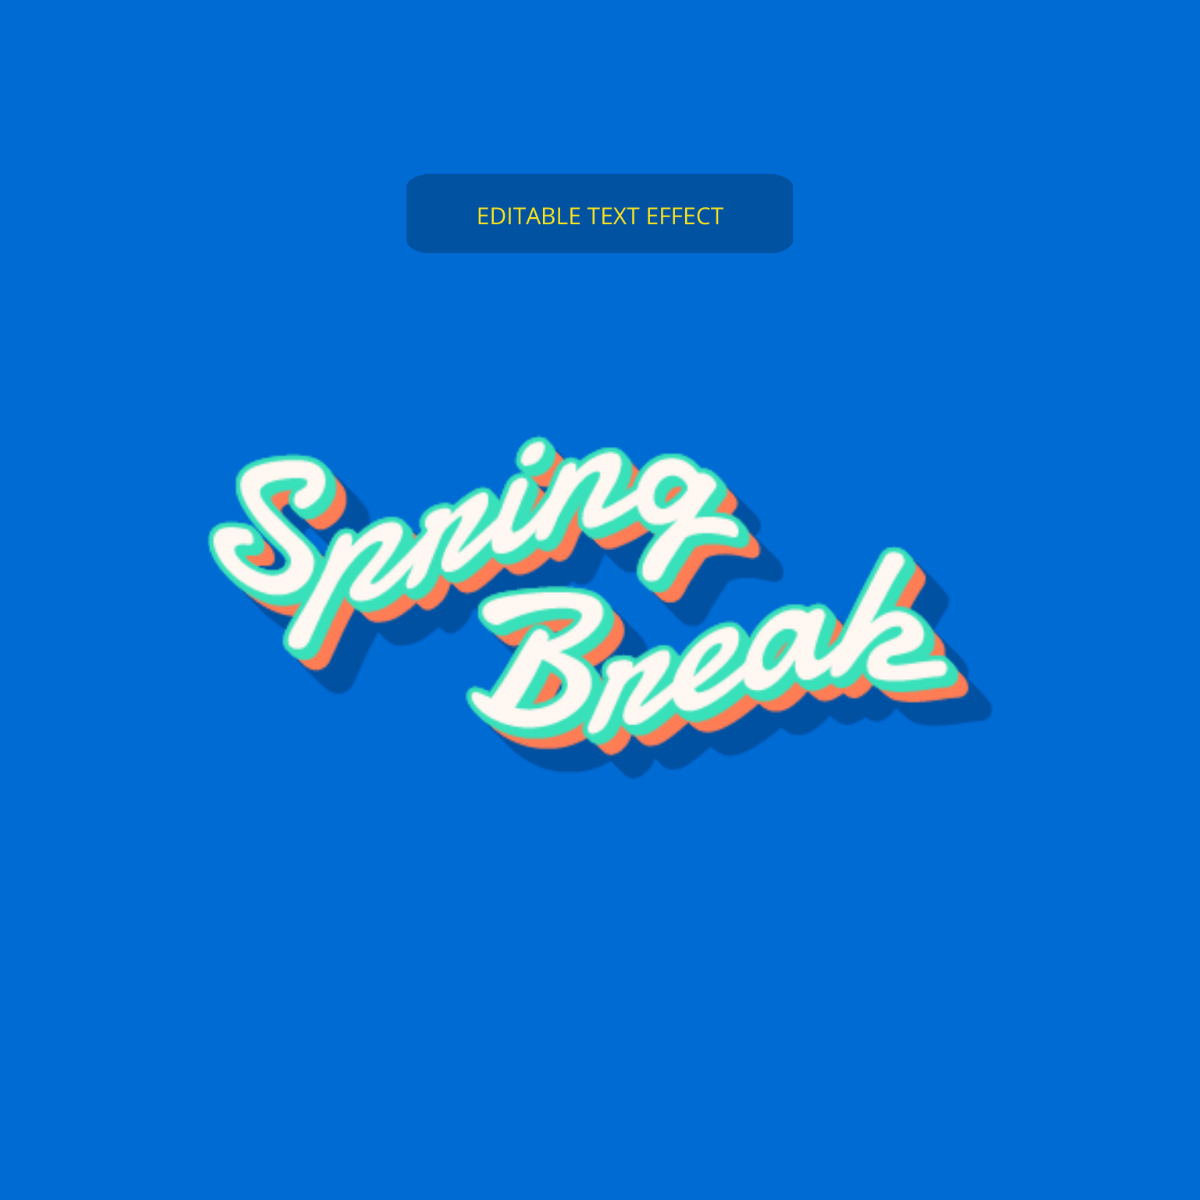 Spring Break Text Effect Template